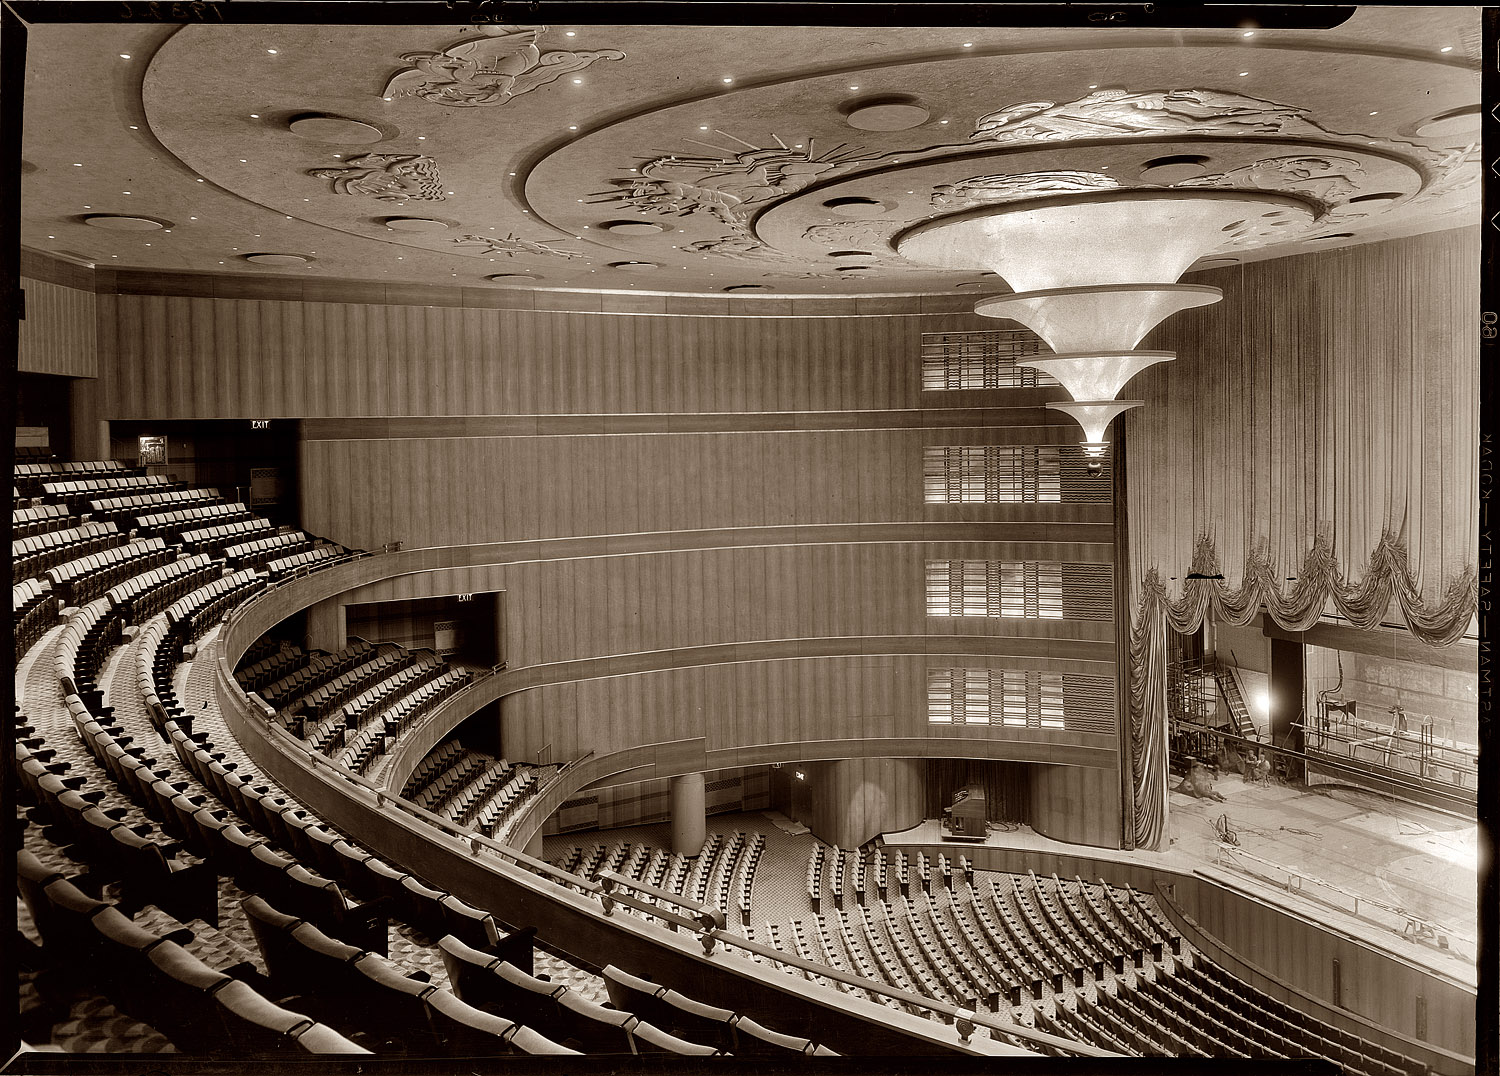 Nov. 22, 1932. The Roxy Theatre on 49th Street. View full size. Photograph by Gottscho-Schleisner. 5x7 acetate negative, Gottscho-Schleisner Collection.